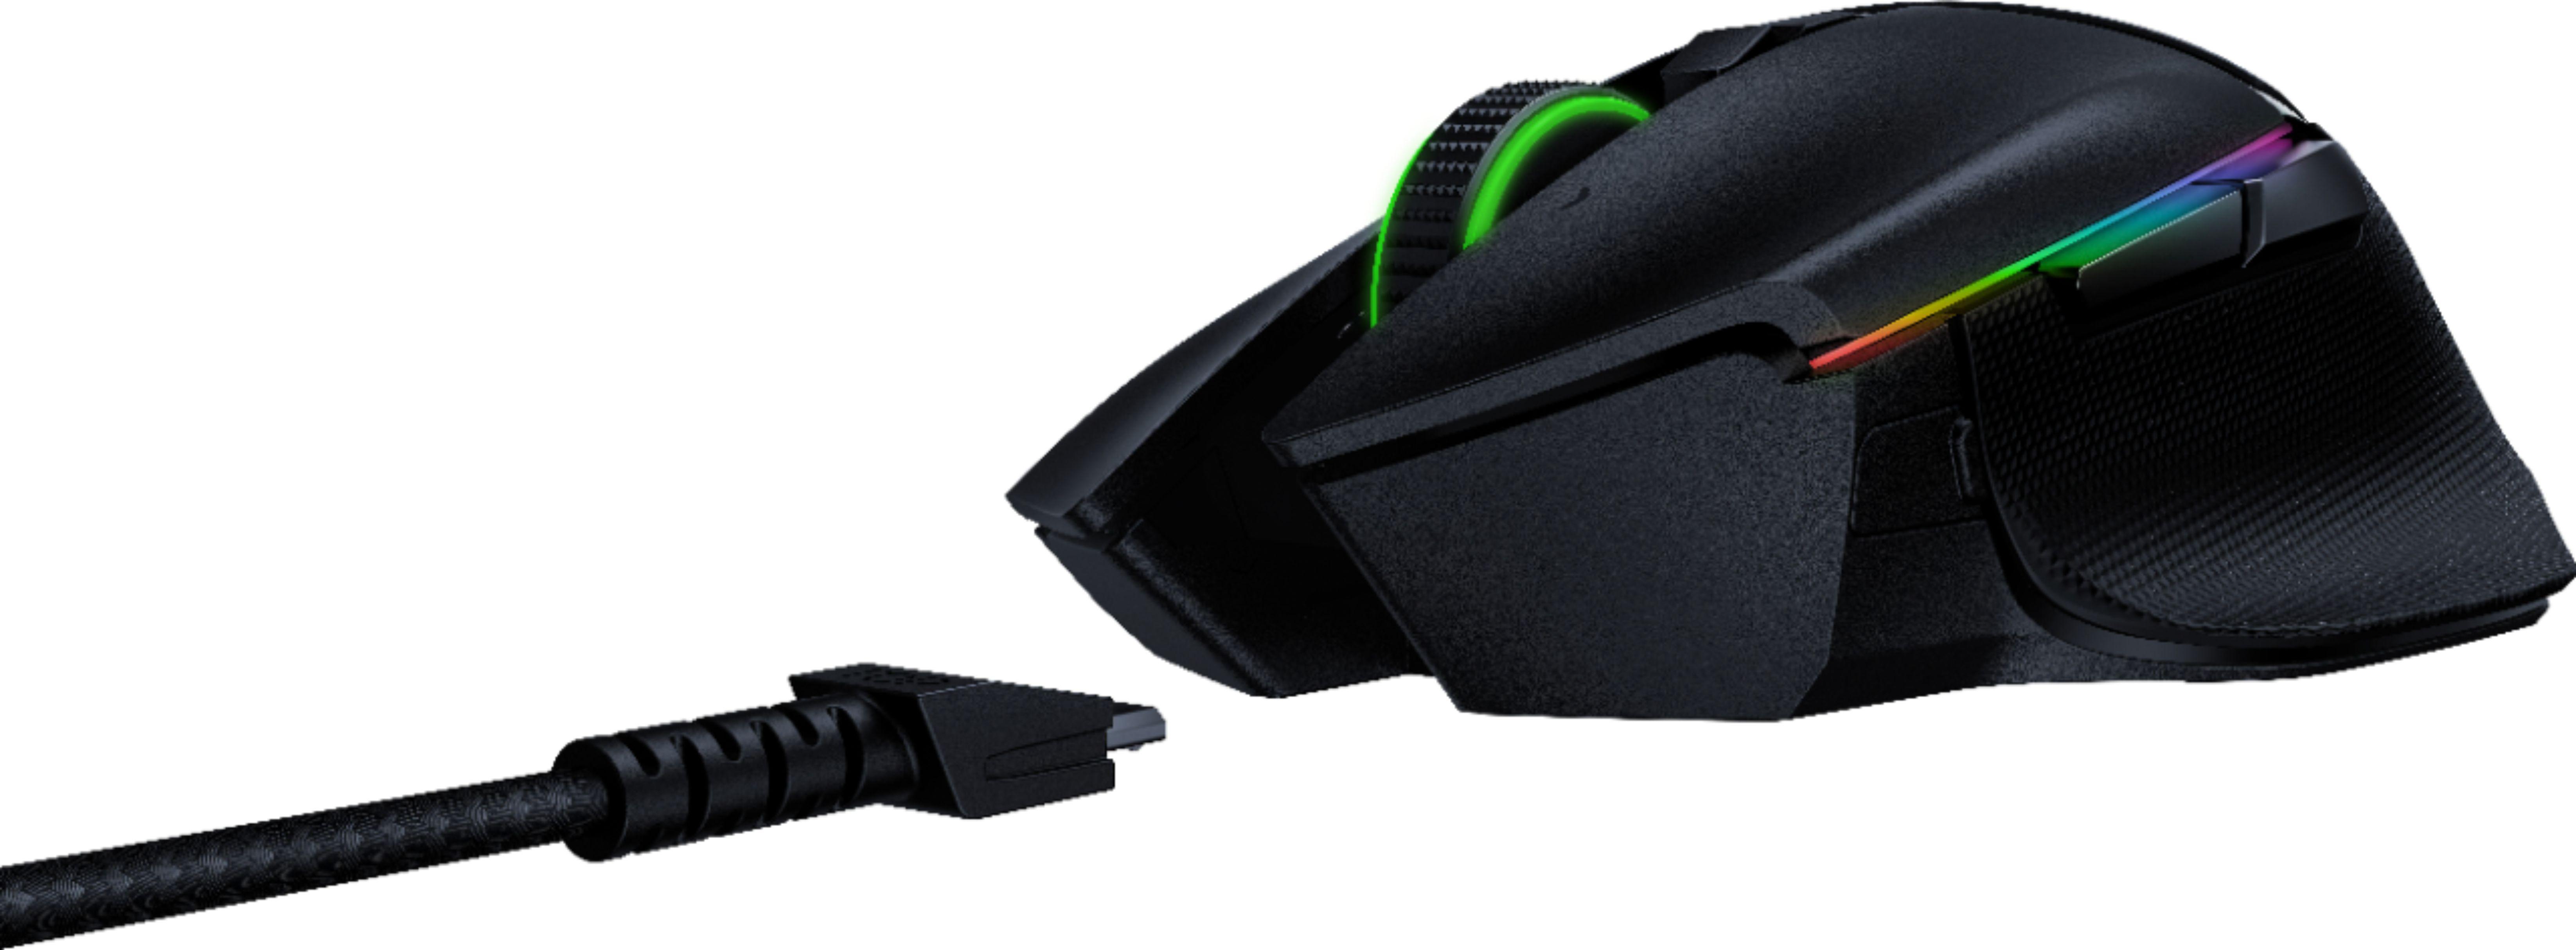 Razer Basilisk Ultimate Wireless Gaming Mouse for $99.99 Shipped